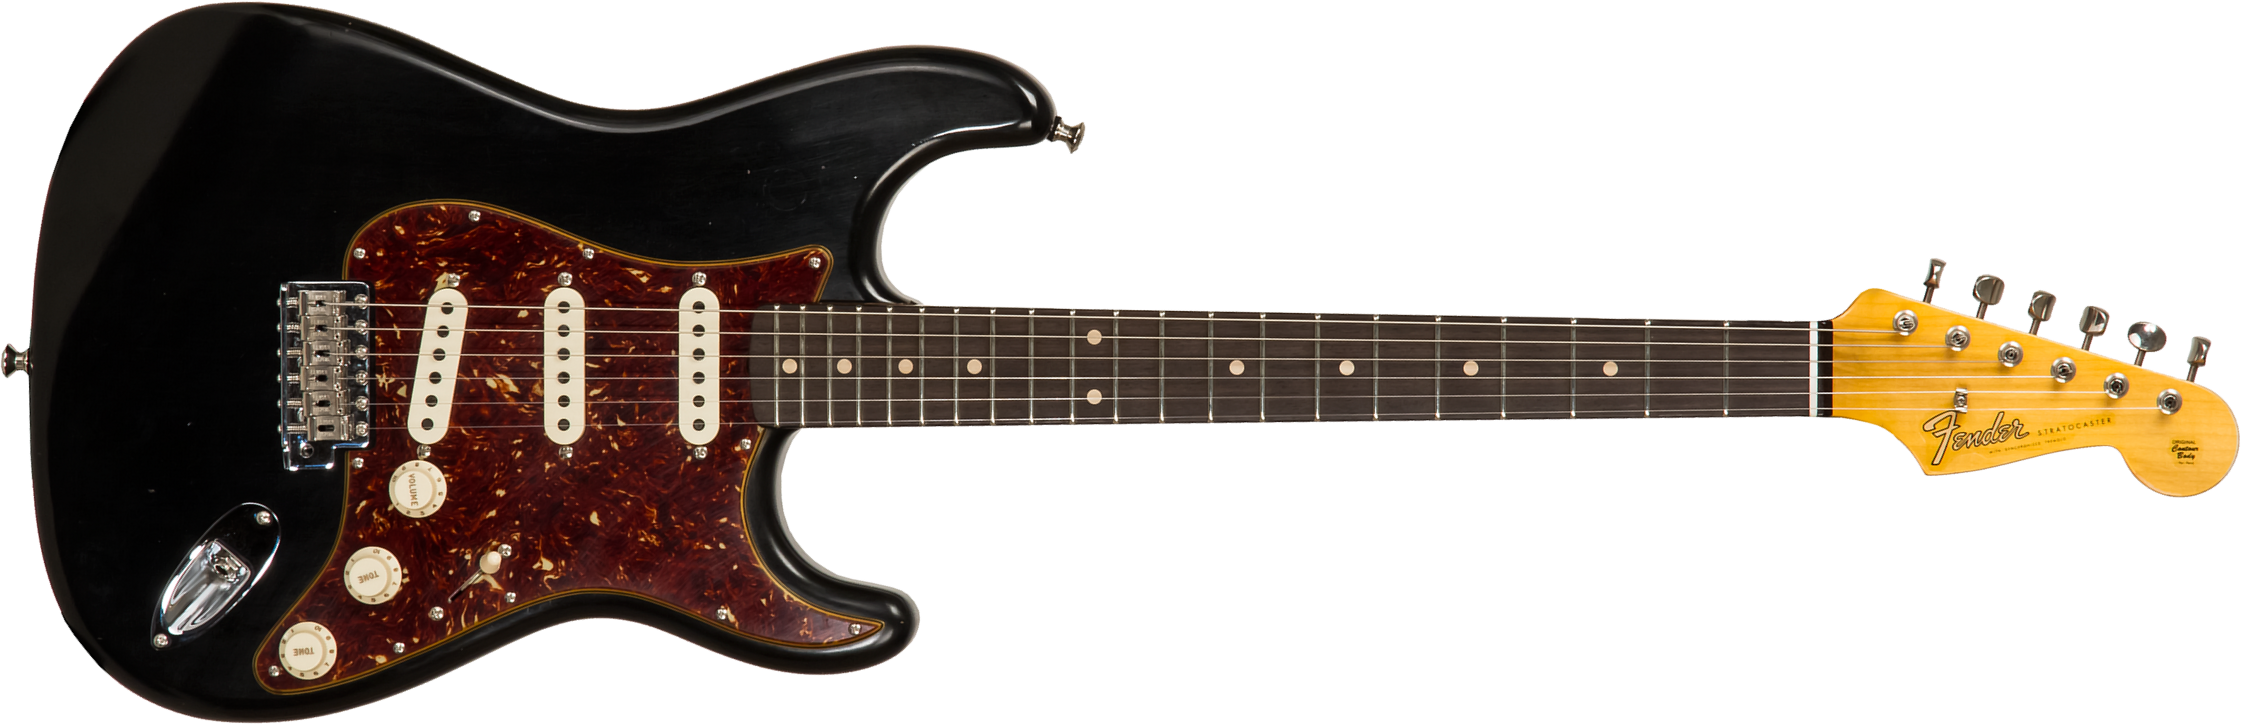 Fender Custom Shop Strat Postmodern 3s Trem Rw #xn13616 - Journeyman Relic Aged Black - Str shape electric guitar - Main picture